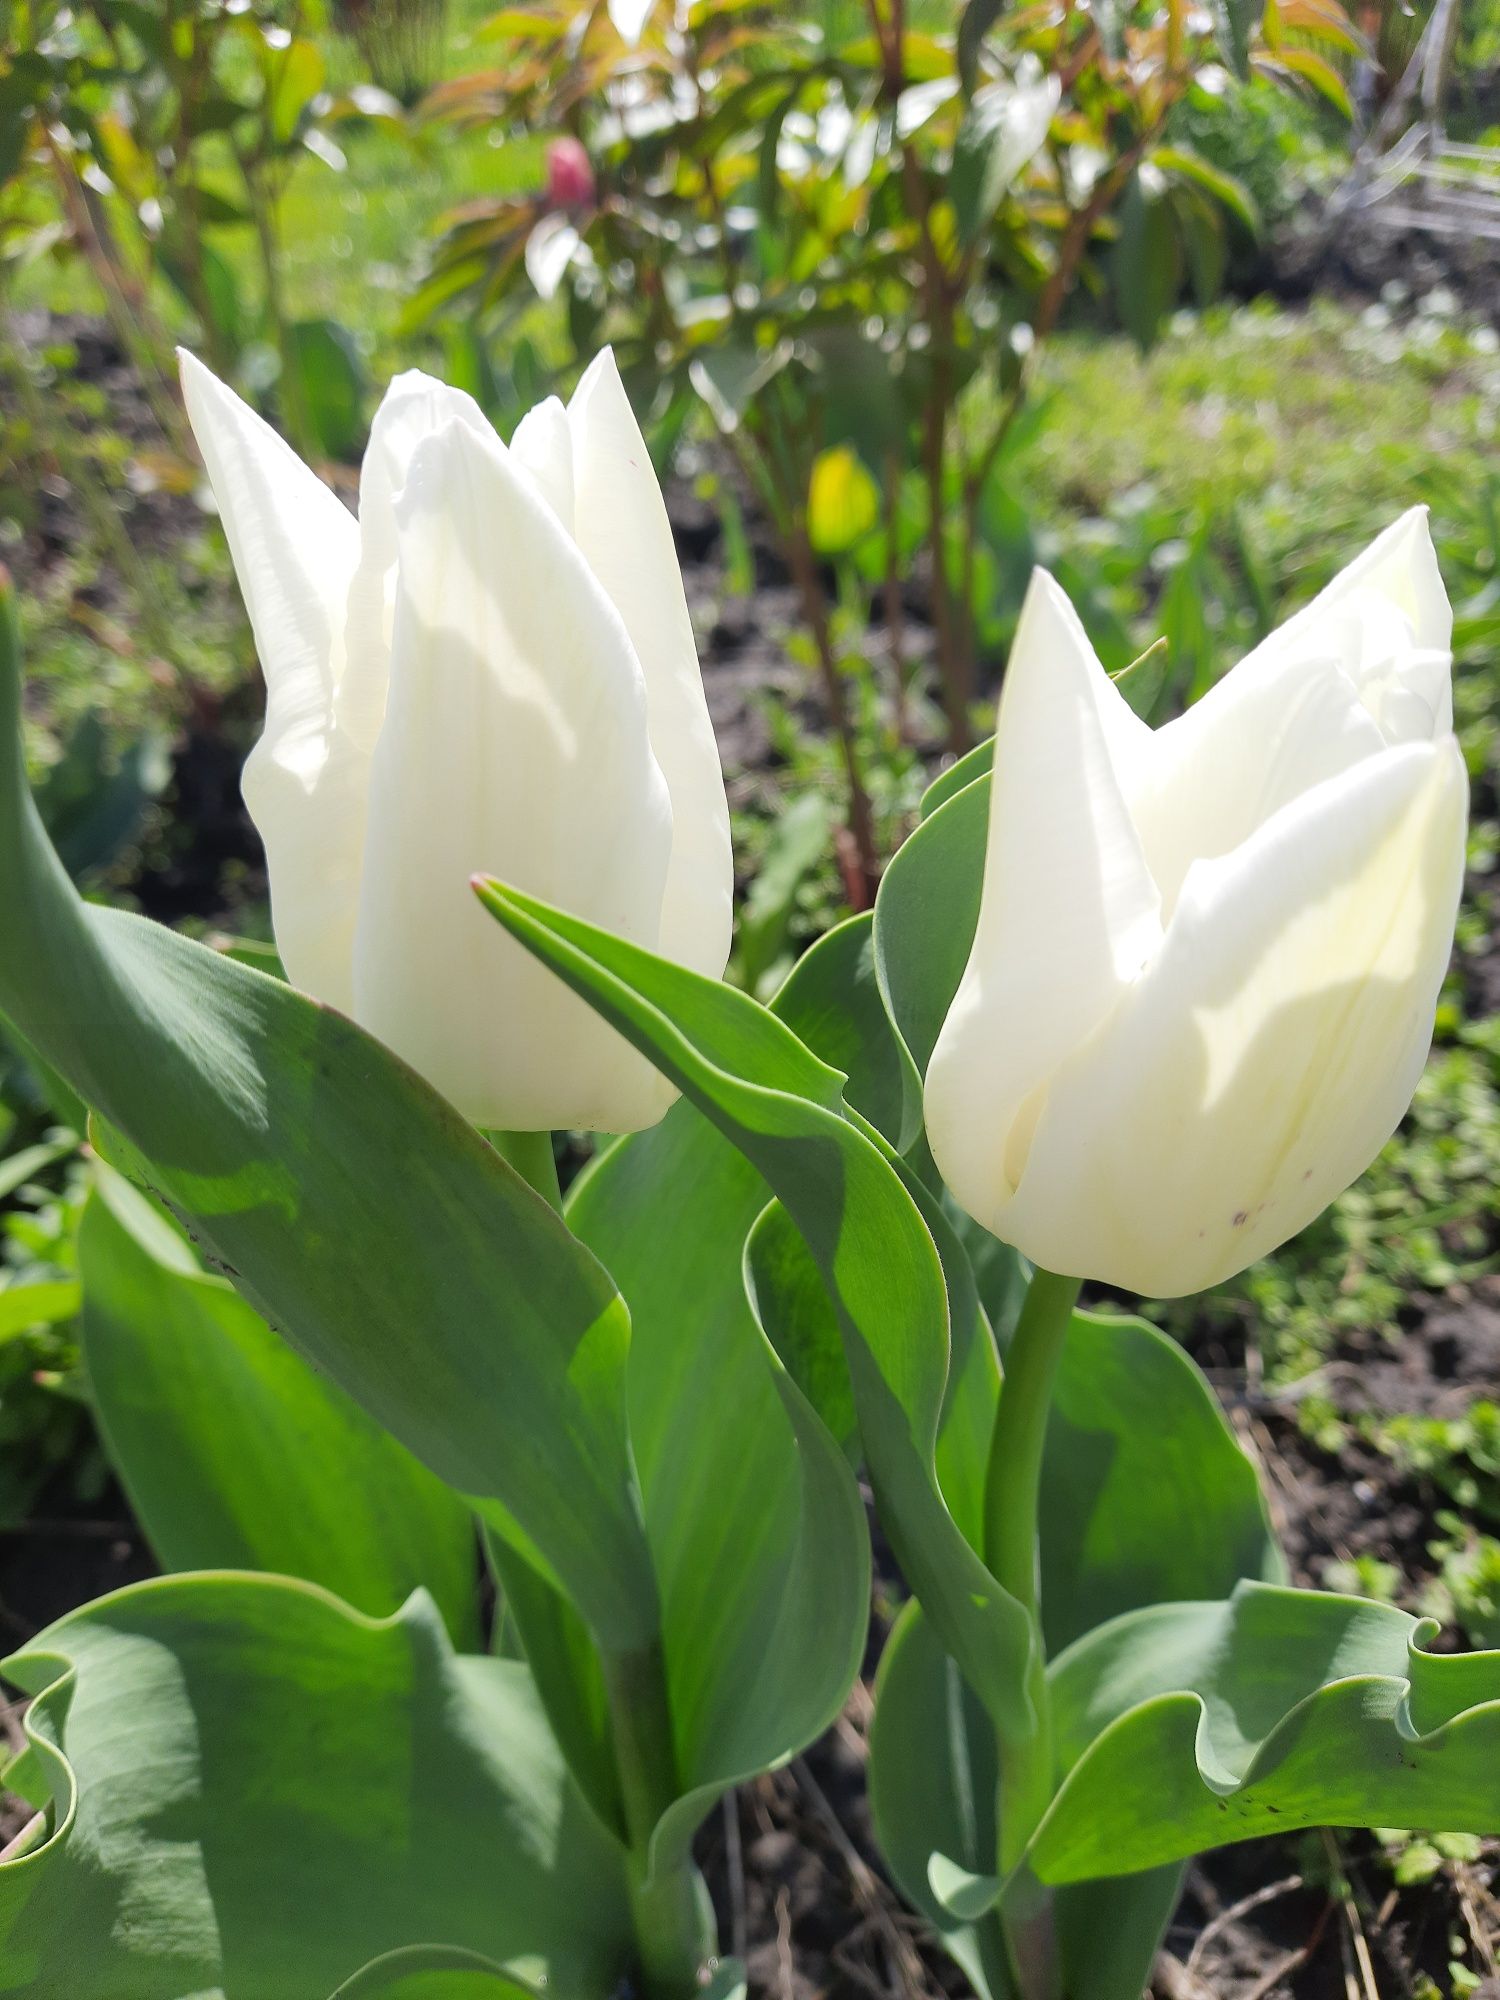 Нарциссы и тюльпаны